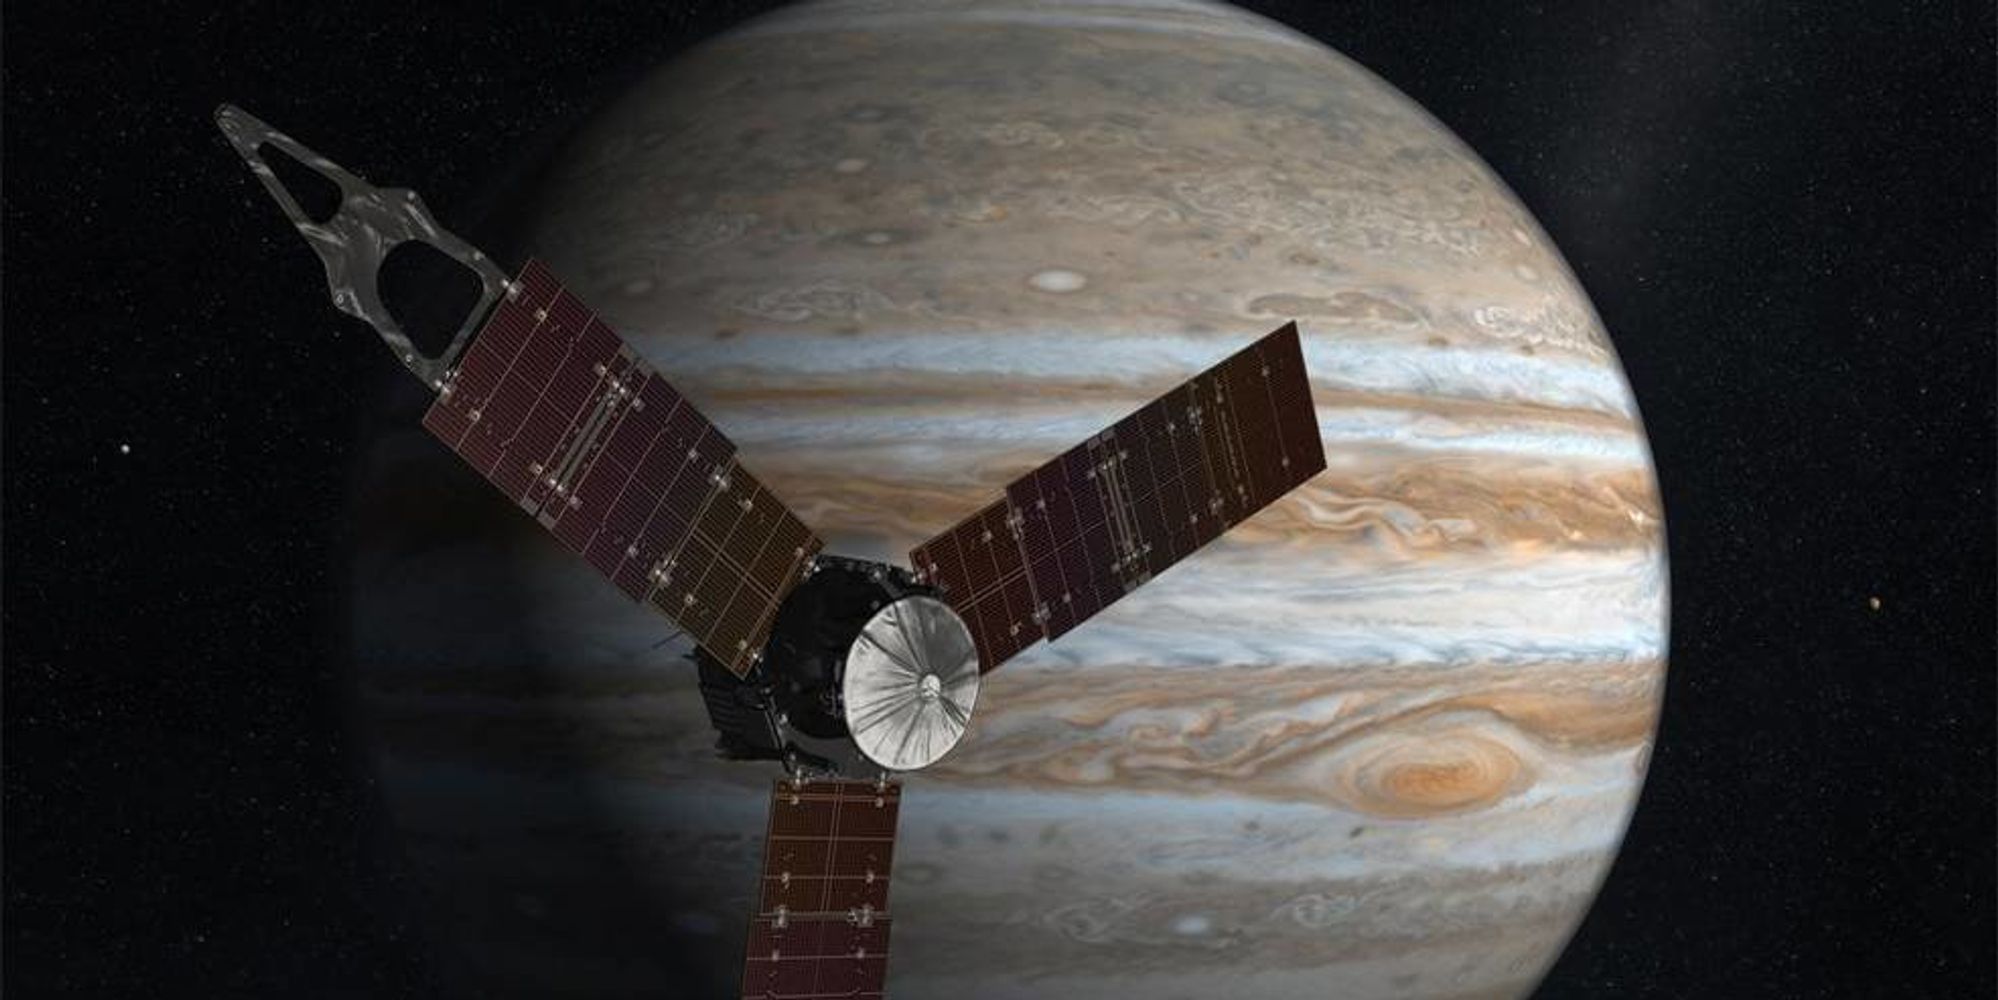 NASA's Spacecraft Juno Begins Orbit Of Jupiter | The Huffington Post